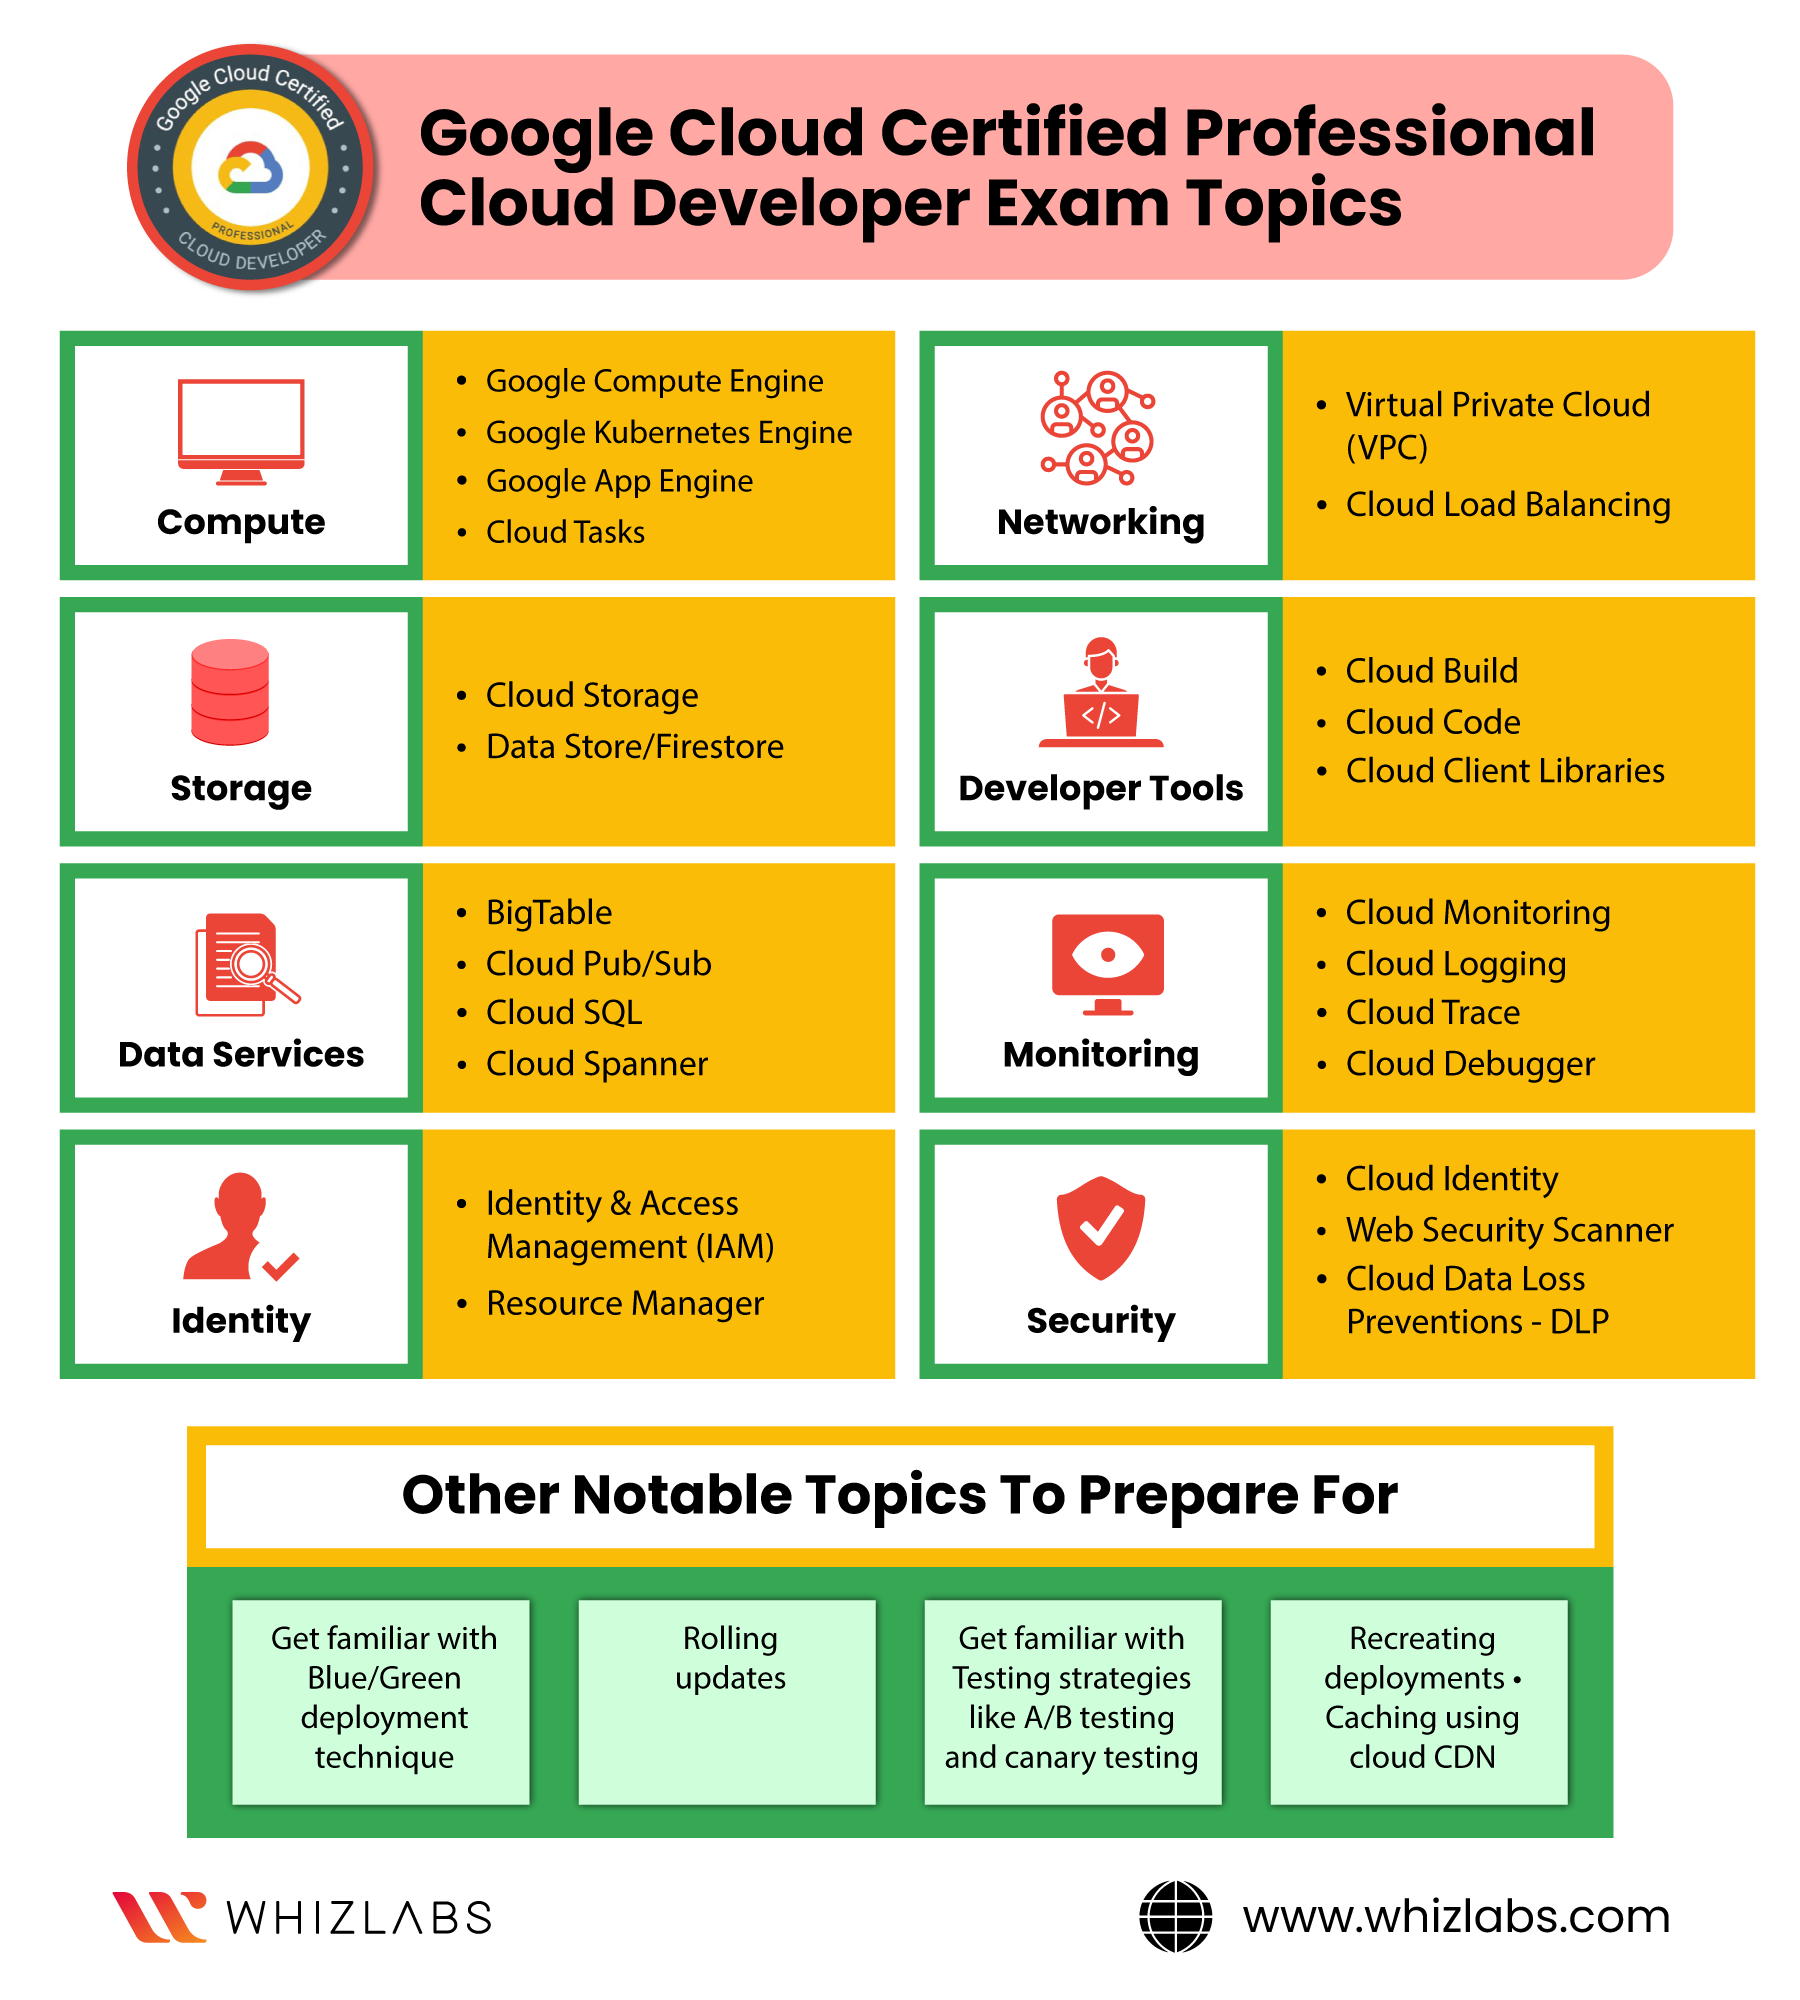 Google Cloud Certified Professional Cloud Developer Exam Topics